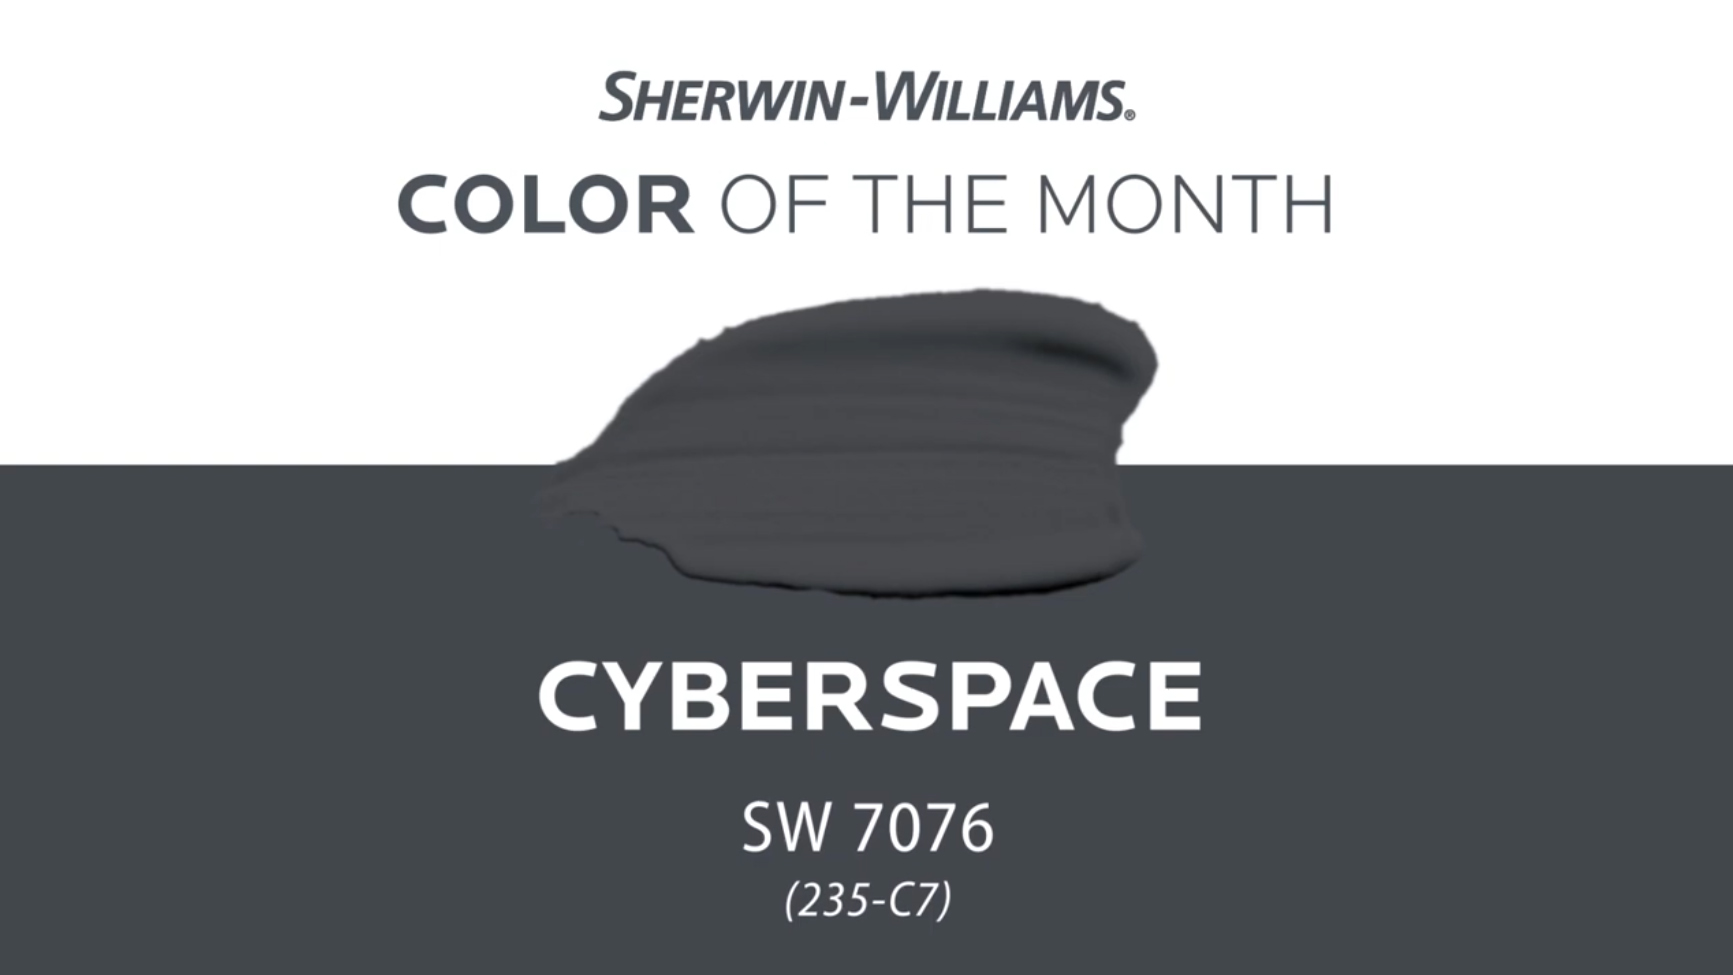 SW 7076 Cyberspace